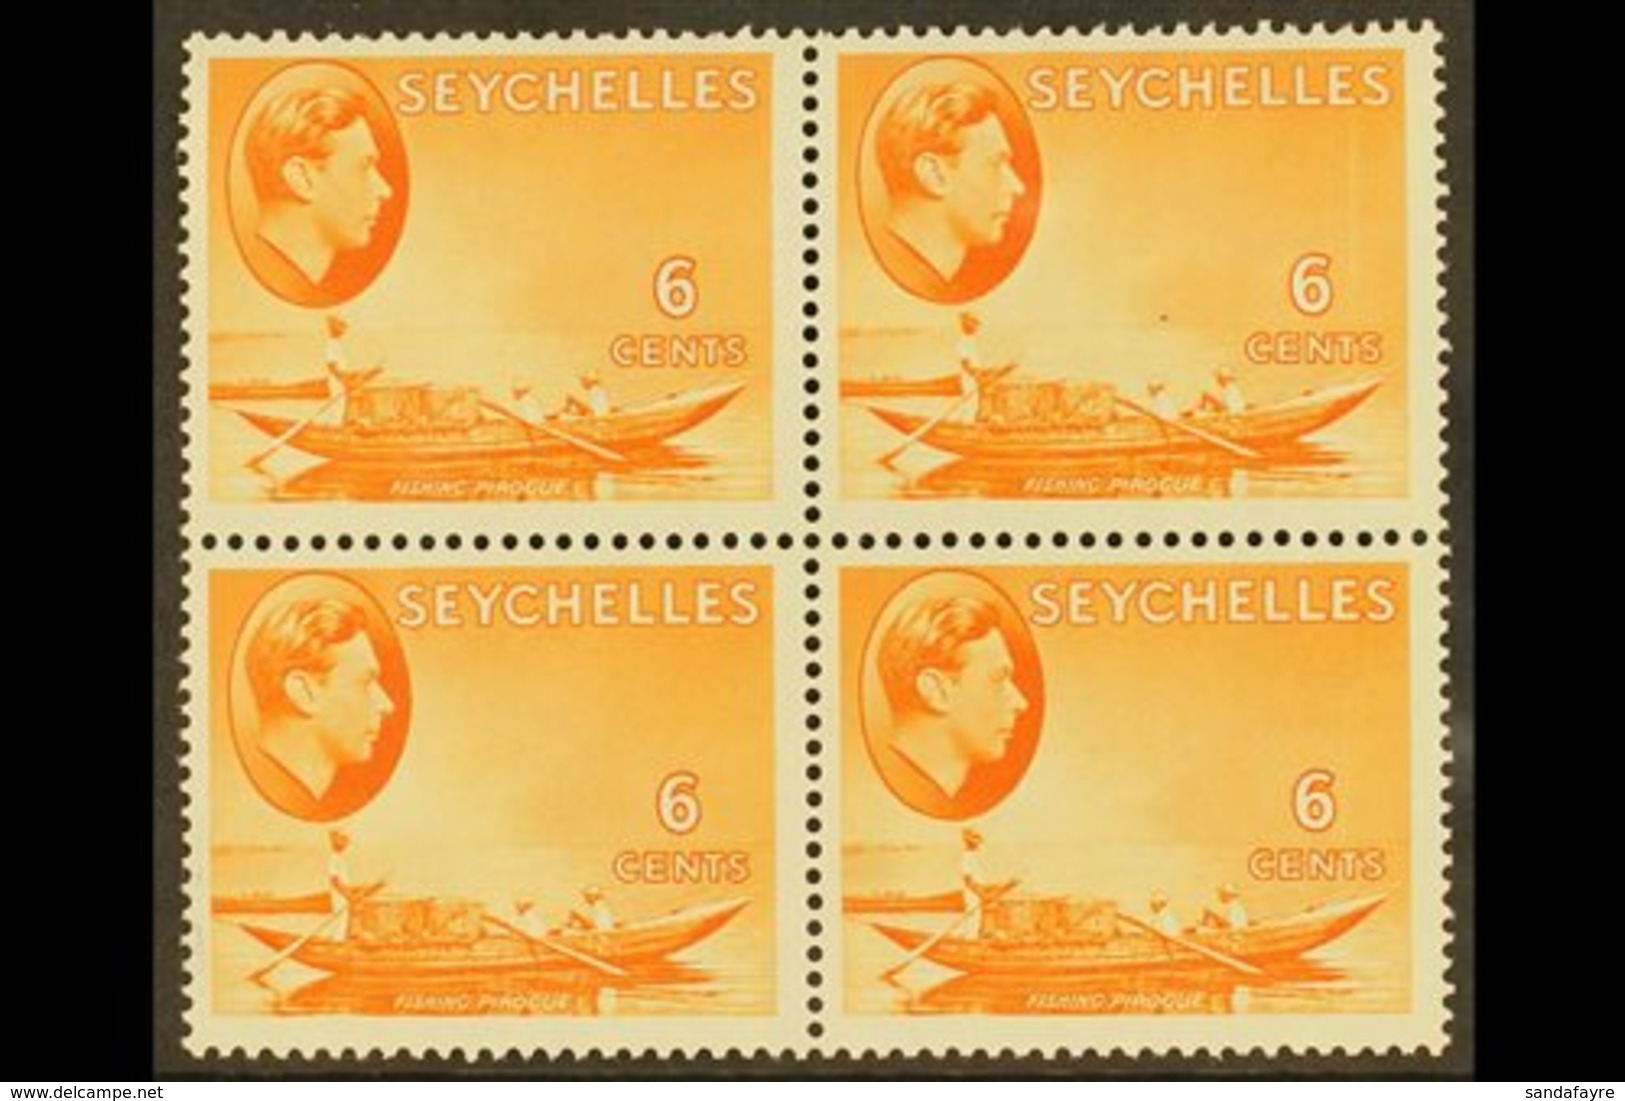 1938-49 NHM MULTIPLE  6c Orange On Chalky Paper, SG 137, Block Of 4, Never Hinged Mint. Lovely, Post Office Fresh Condit - Seychelles (...-1976)